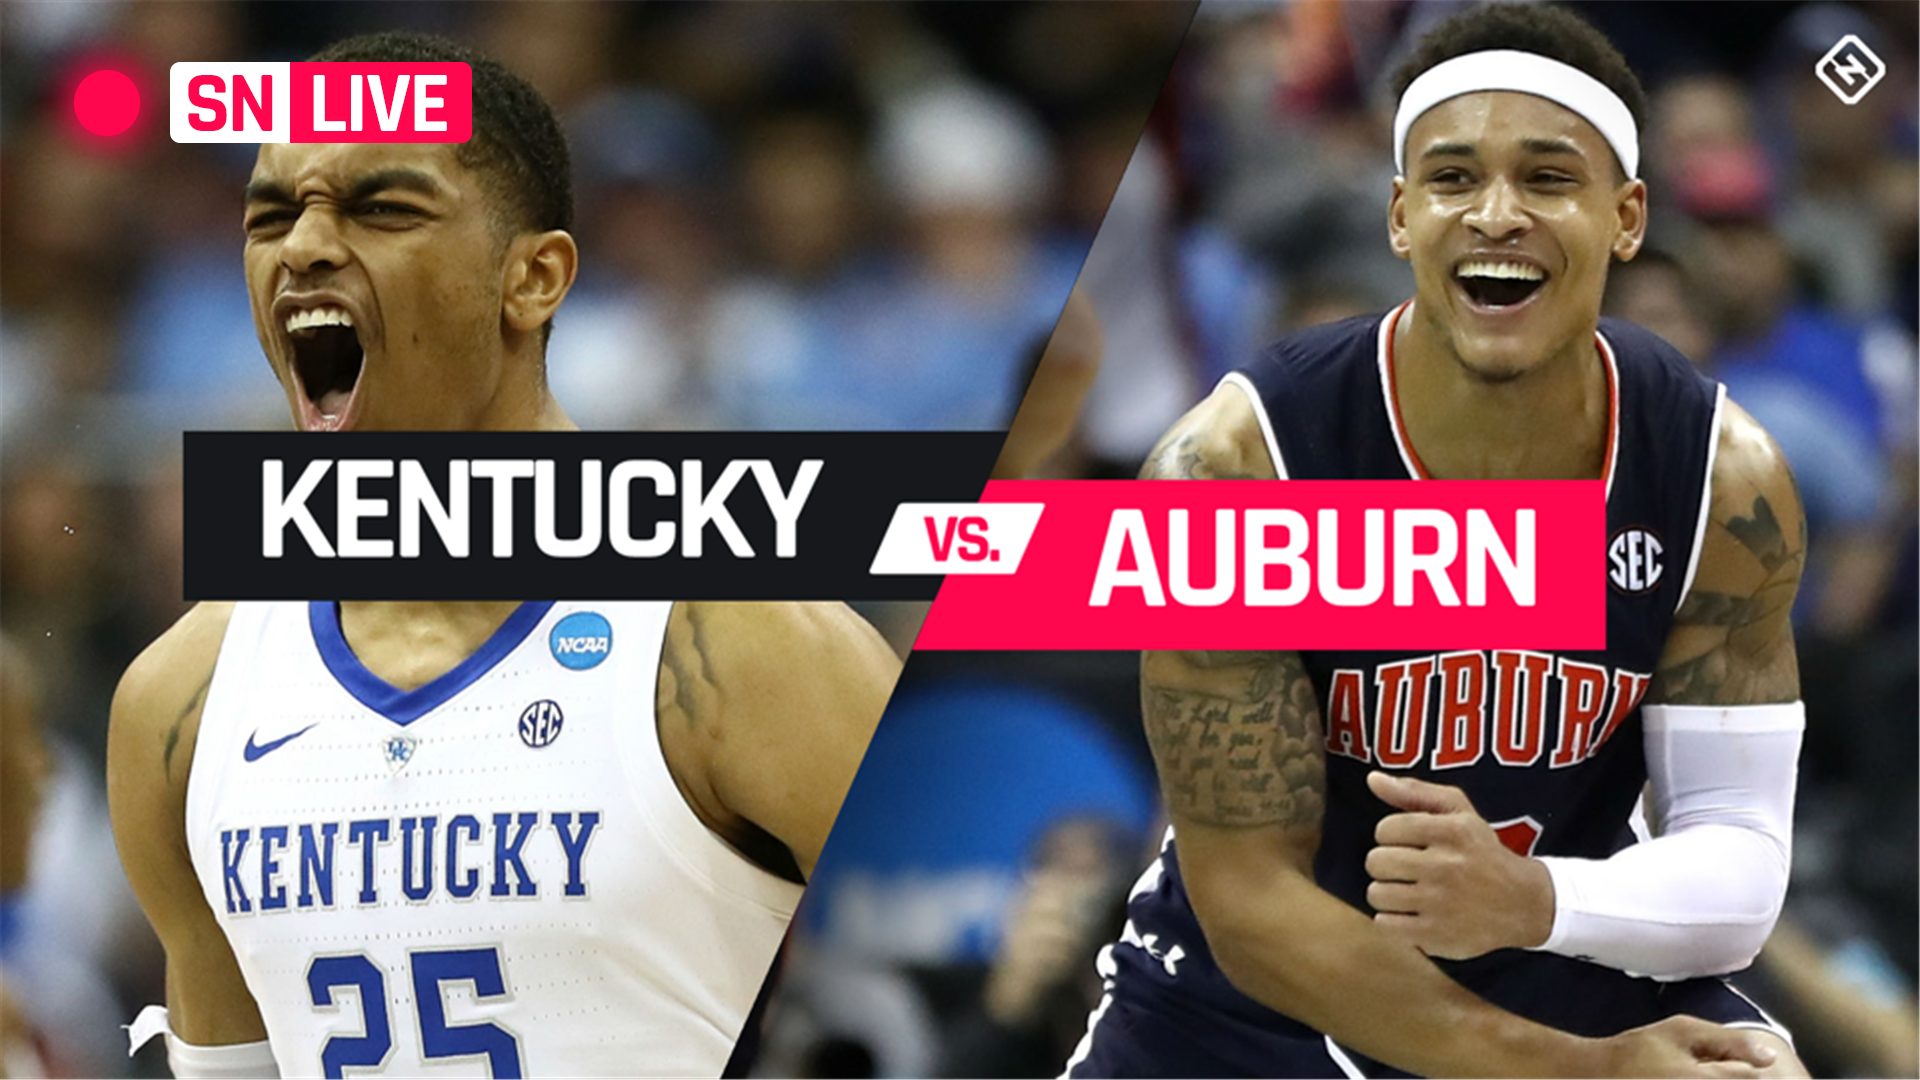 Kentucky vs. Auburn Live score, updates, highlights from Elite Eight